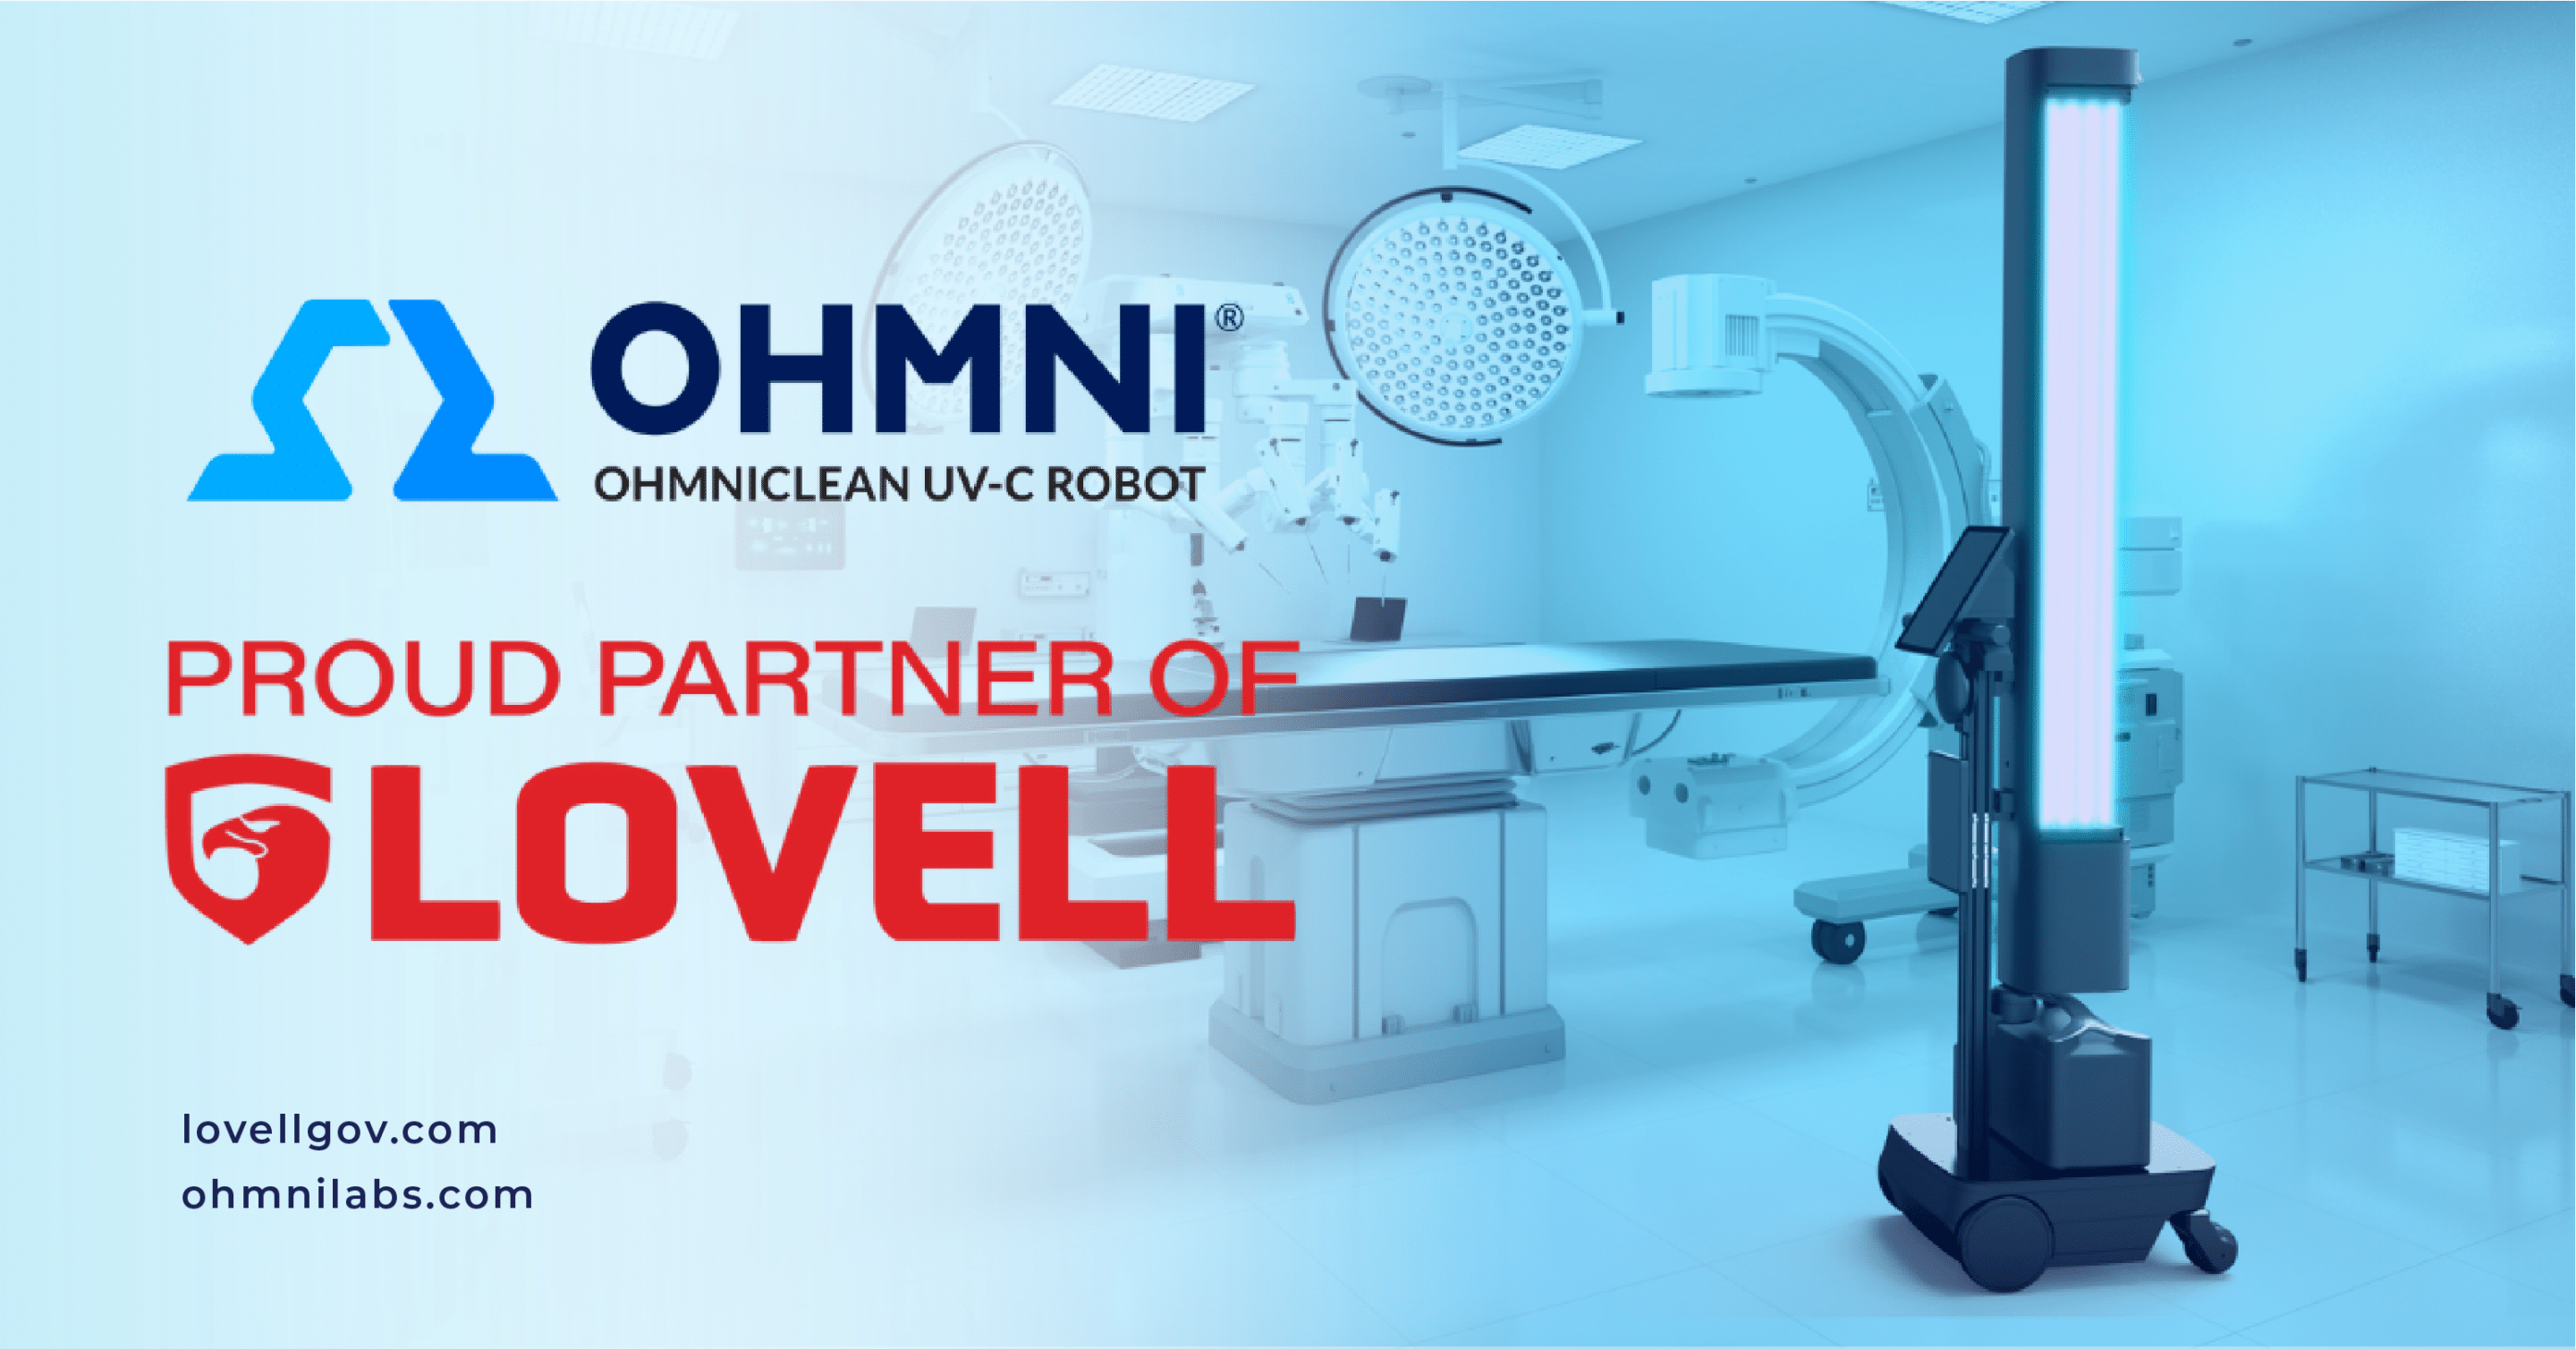 OhmniLabs Lovell Strategic Partnership